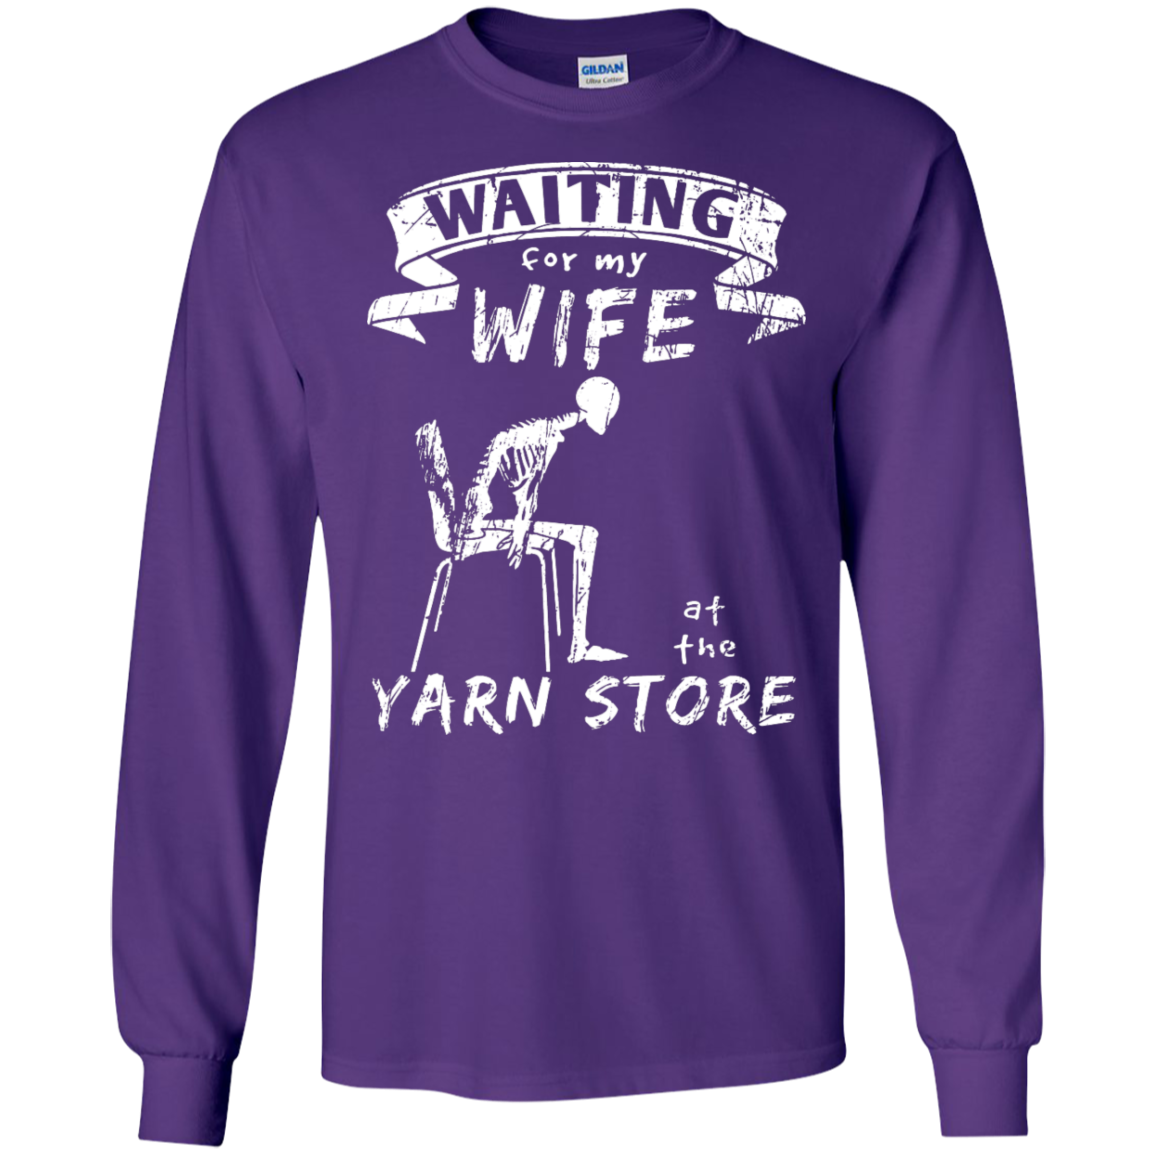 Waiting at the Yarn Store Long Sleeve T-Shirt - Crafter4Life - 4